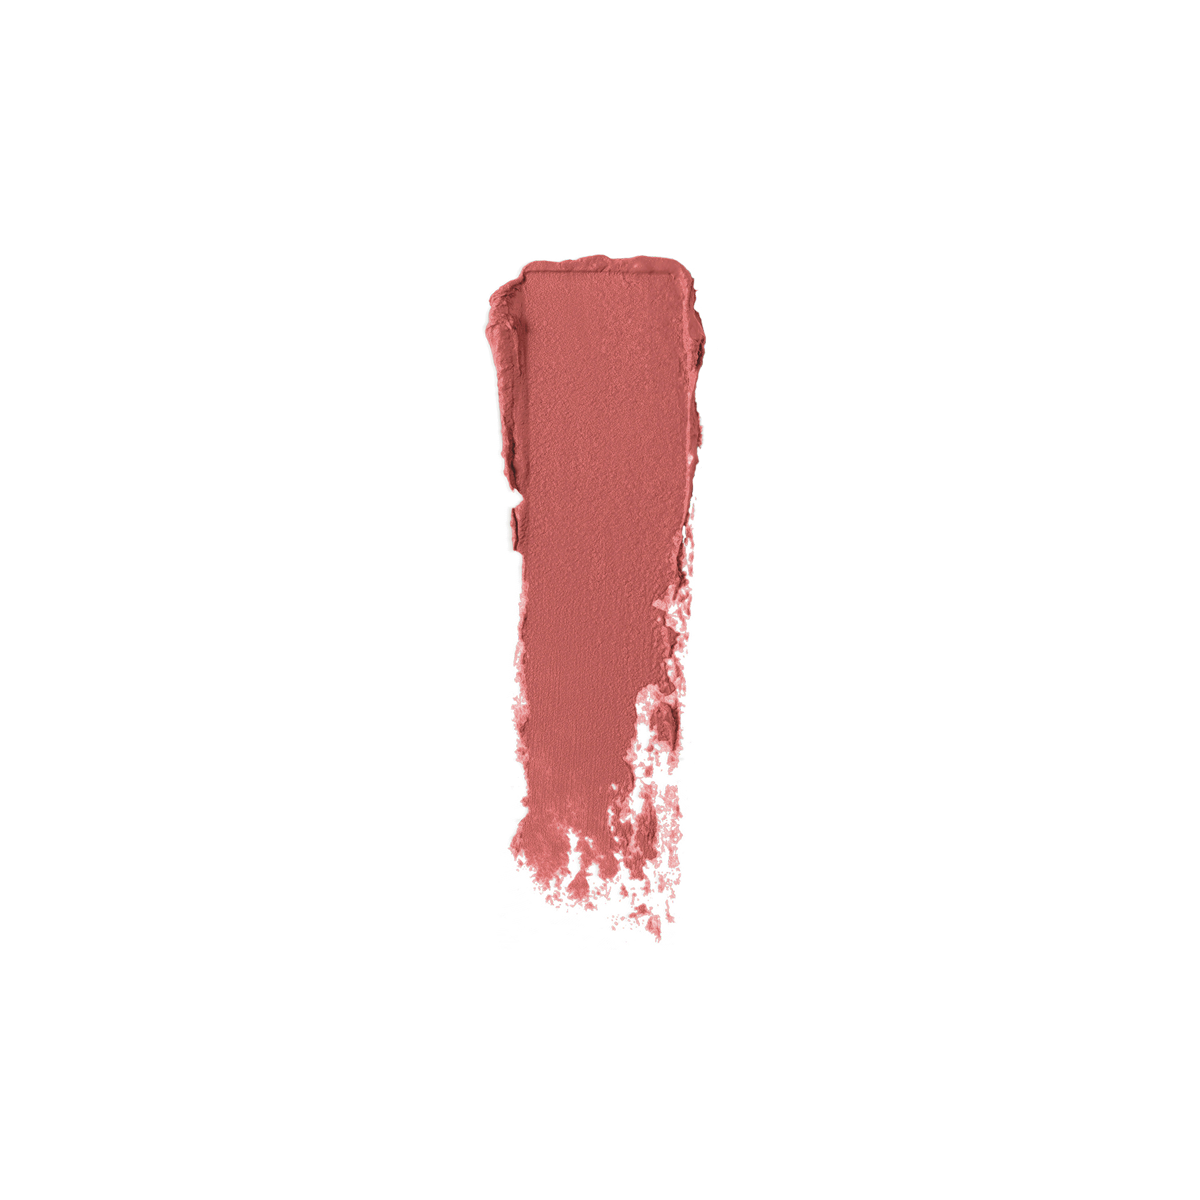 NARS - Lipstick